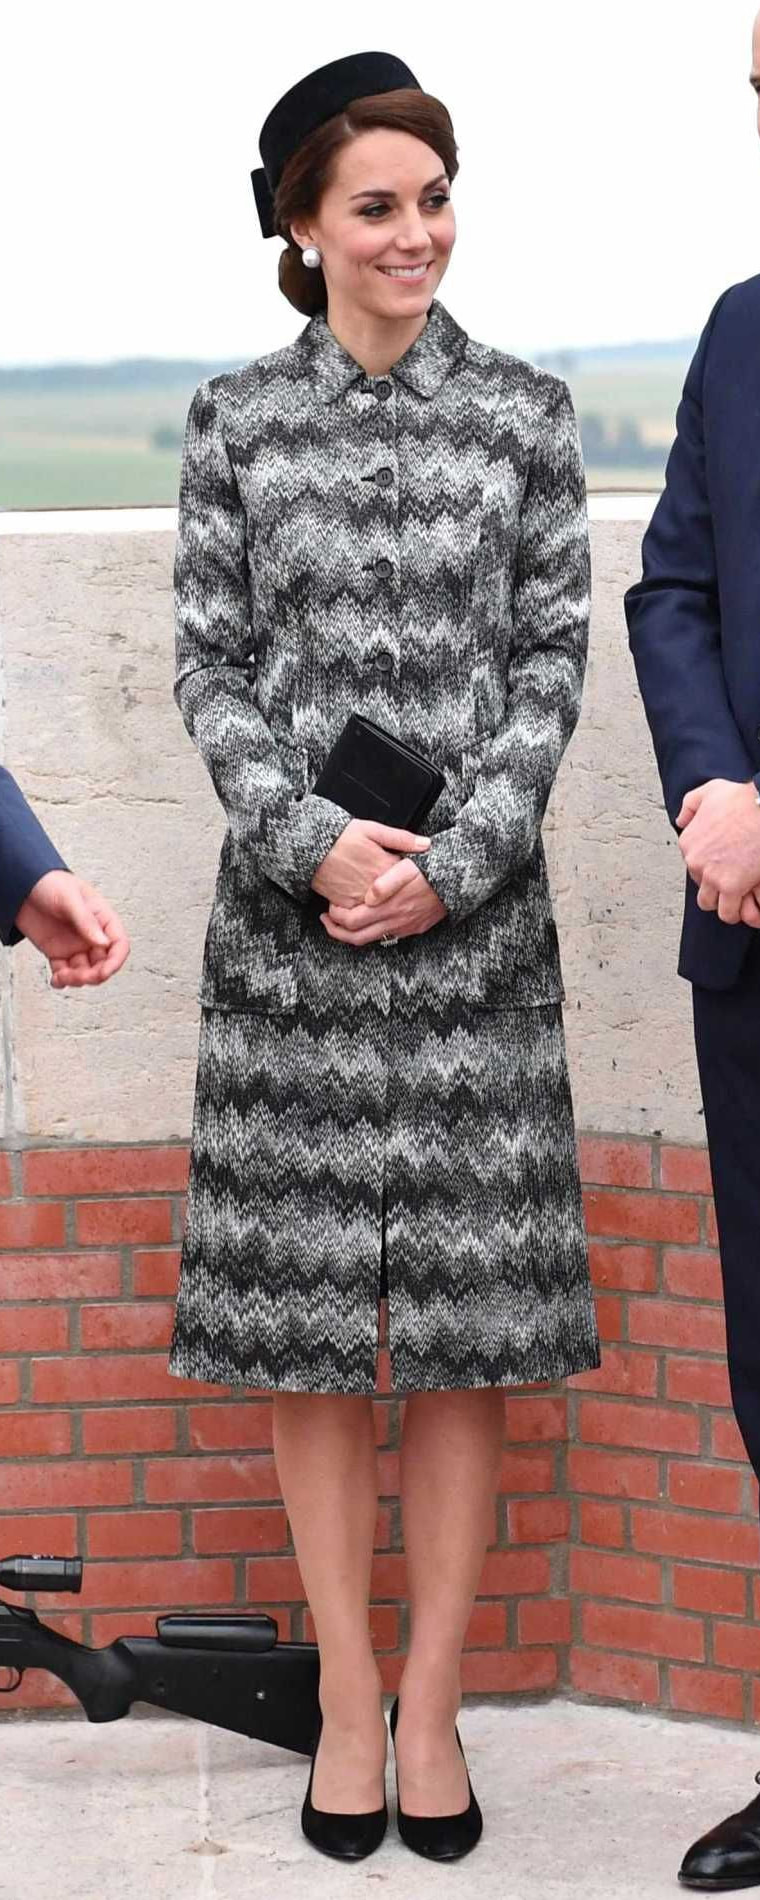 Missoni Metallic Crochet-Knit Coat as seen on Kate Middleton, The Duchess of Cambridge.